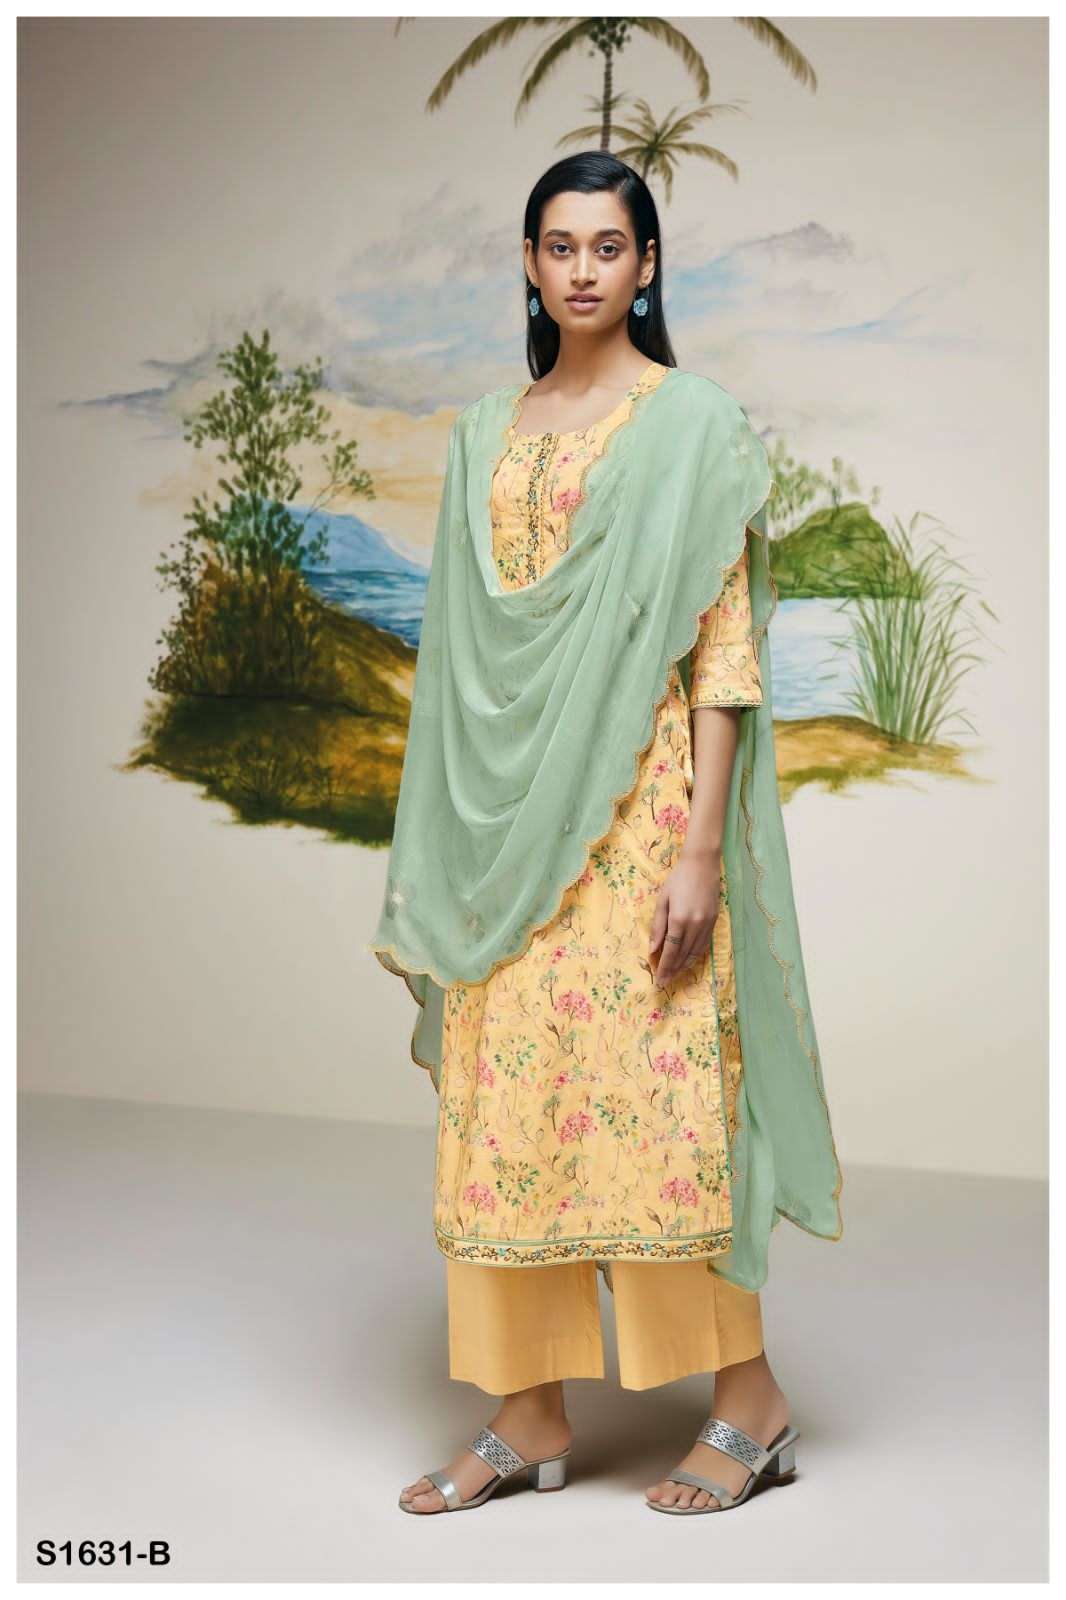 ganga sonam 1631 series indian designer salwar kameez catalogue wholesale price surat 